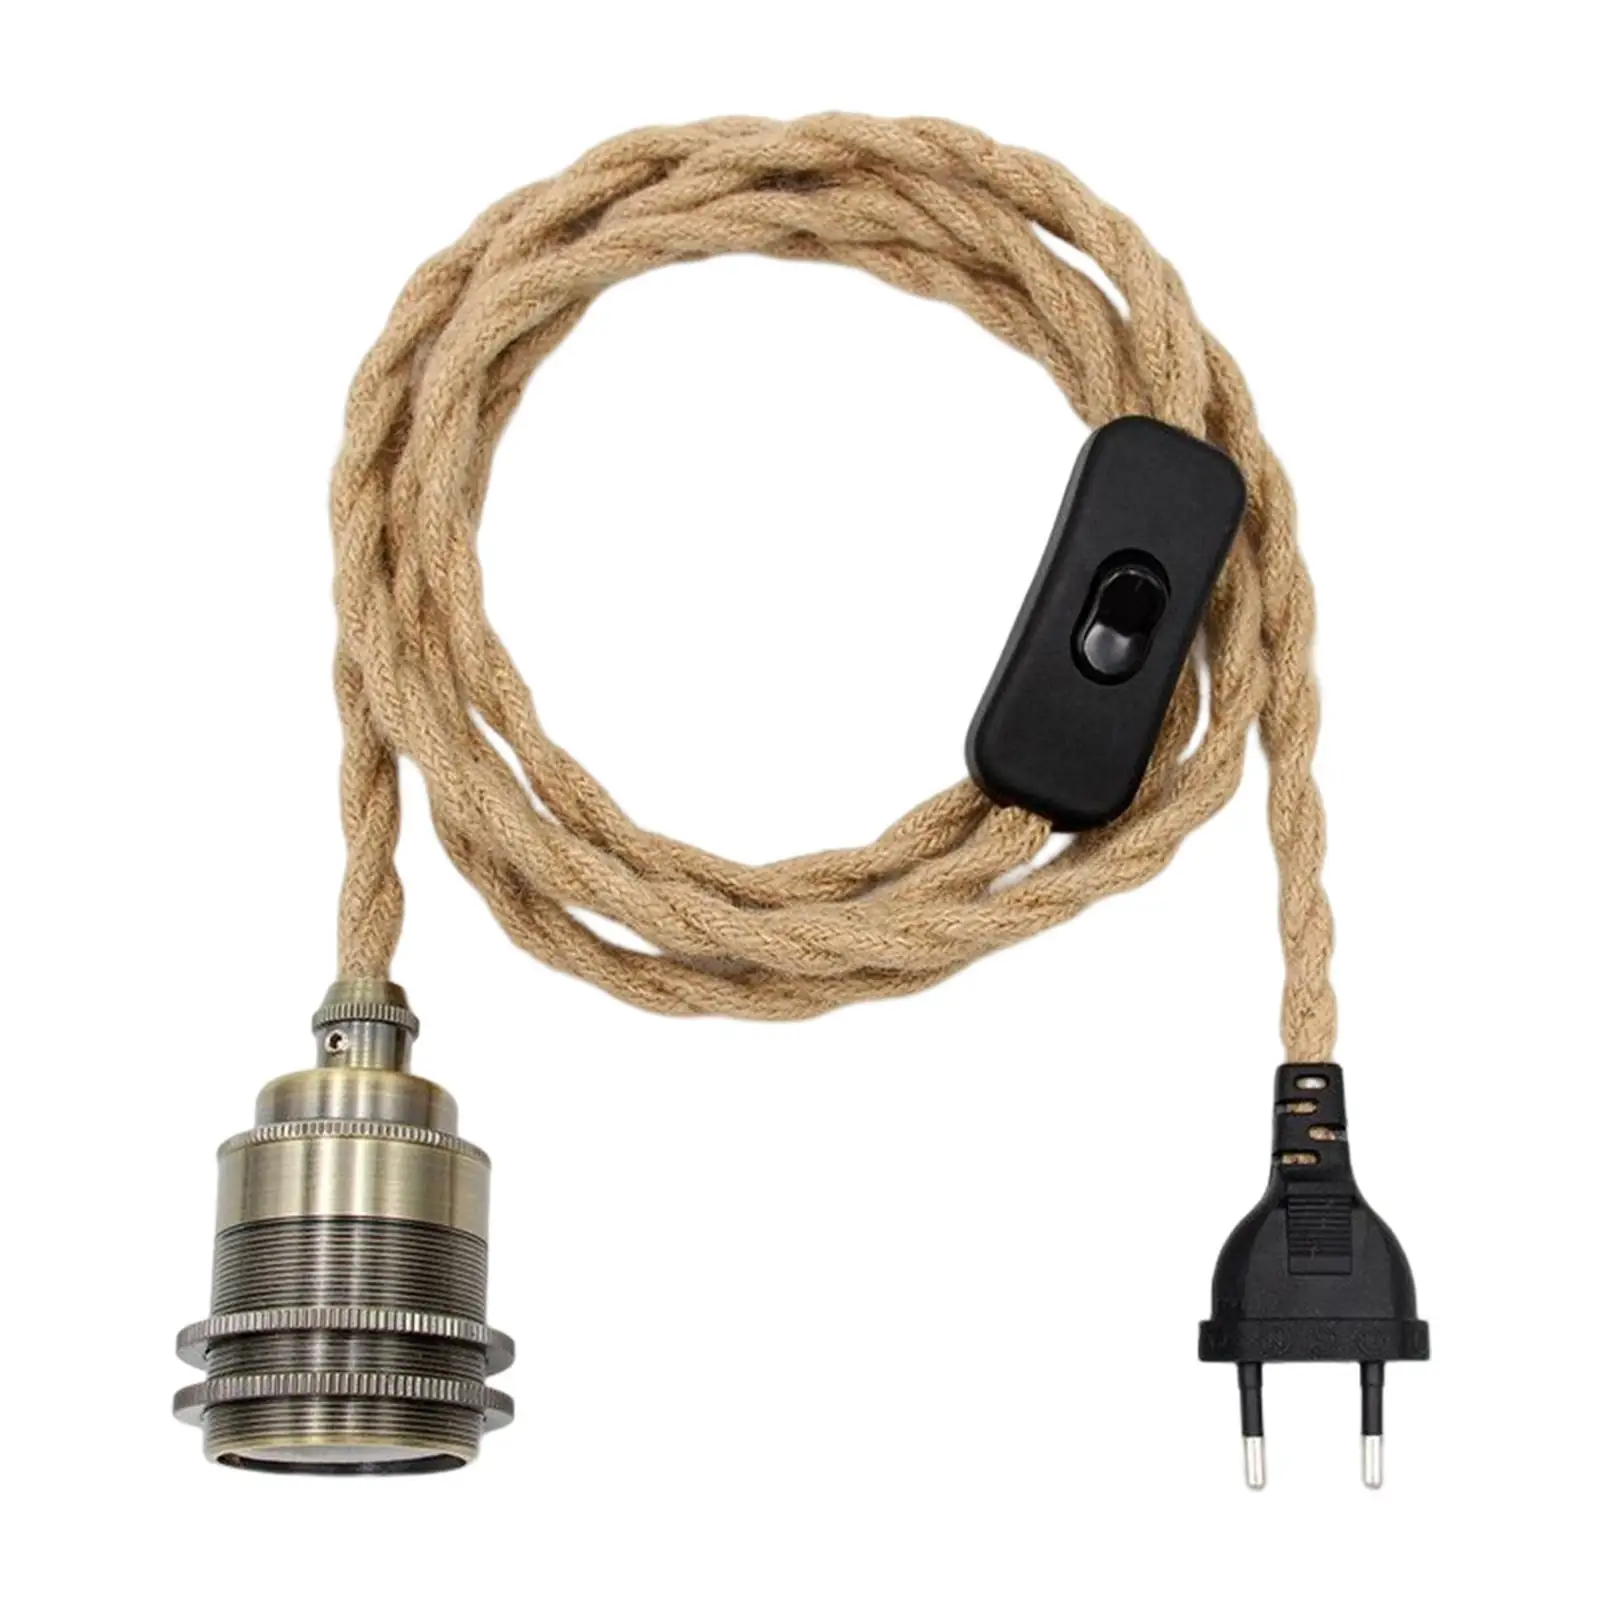 Lamp Power Cord Hanging Light Cord Kit for Bedroom Home Bar Farmhouse Wall Lighing